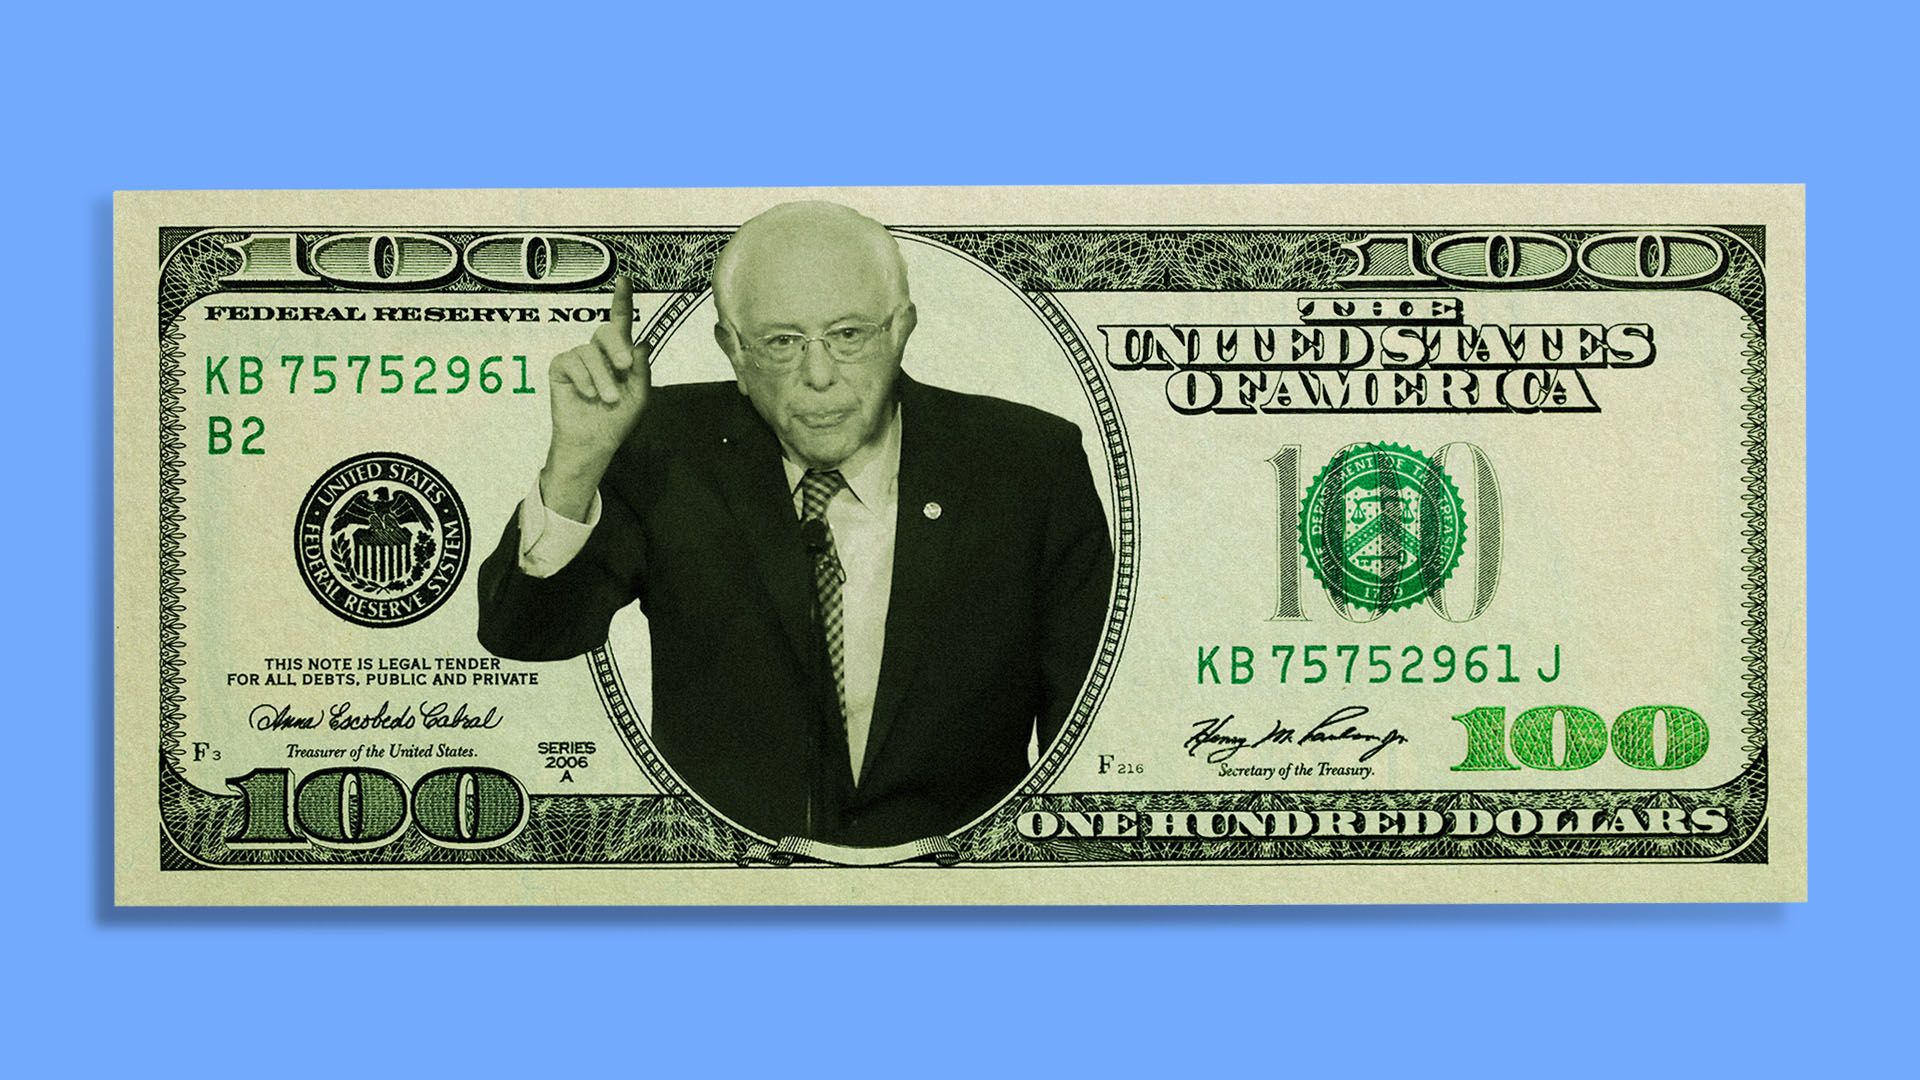 Illustration of Bernie Sanders on a 100 dollar bill